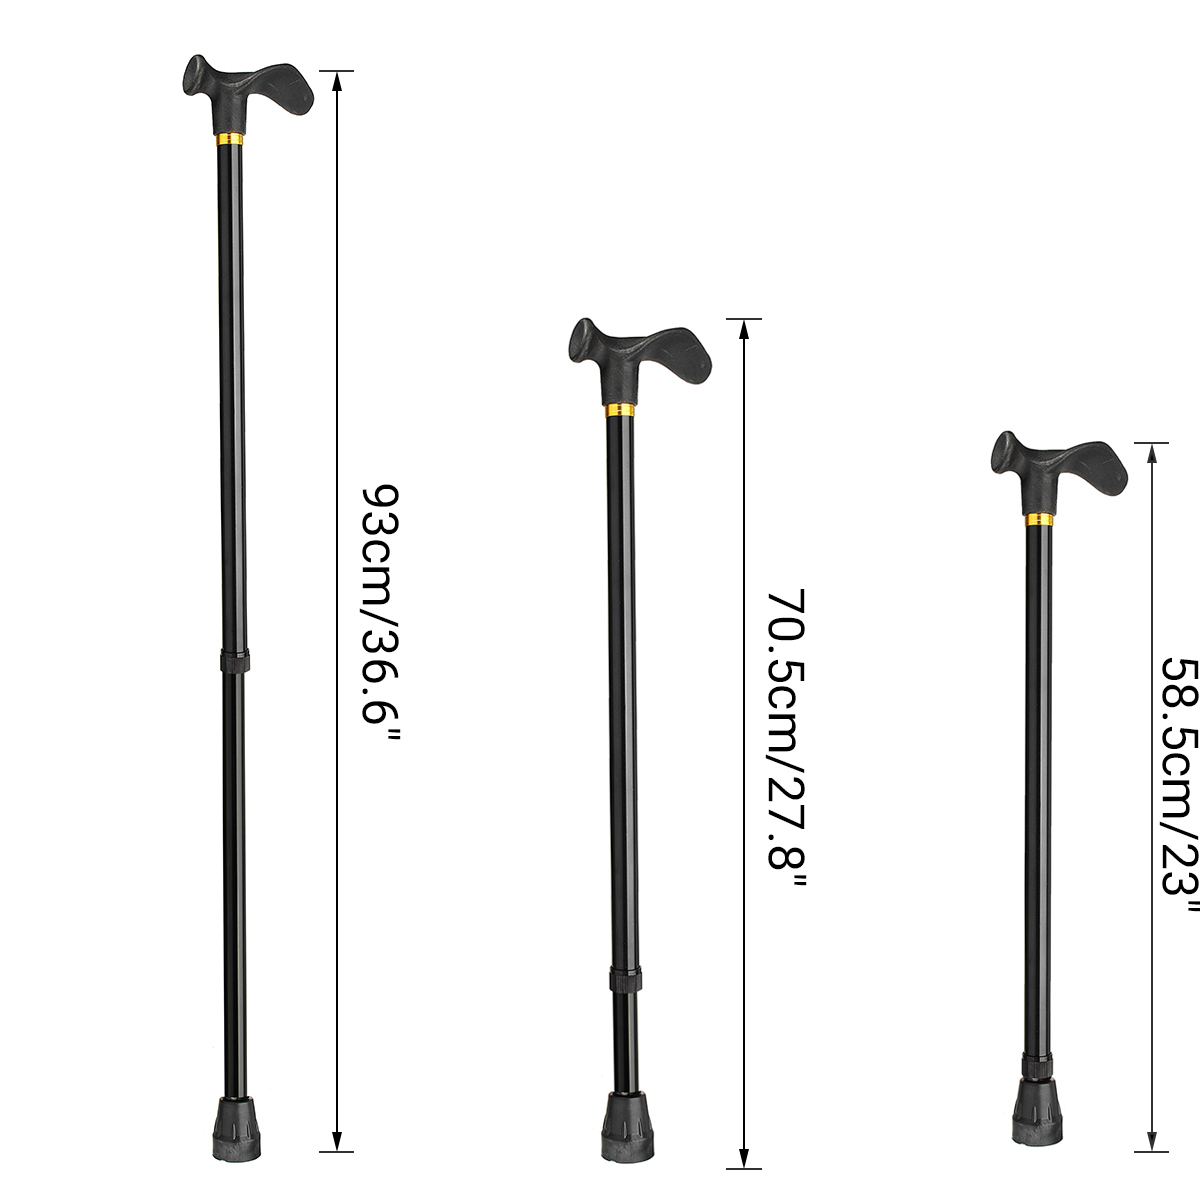 Ergonomic-Handle-Height-Adjustable-Walking-Aid-Cane-Stick-Arthritis-Comfort-Grip-Safety-1496360